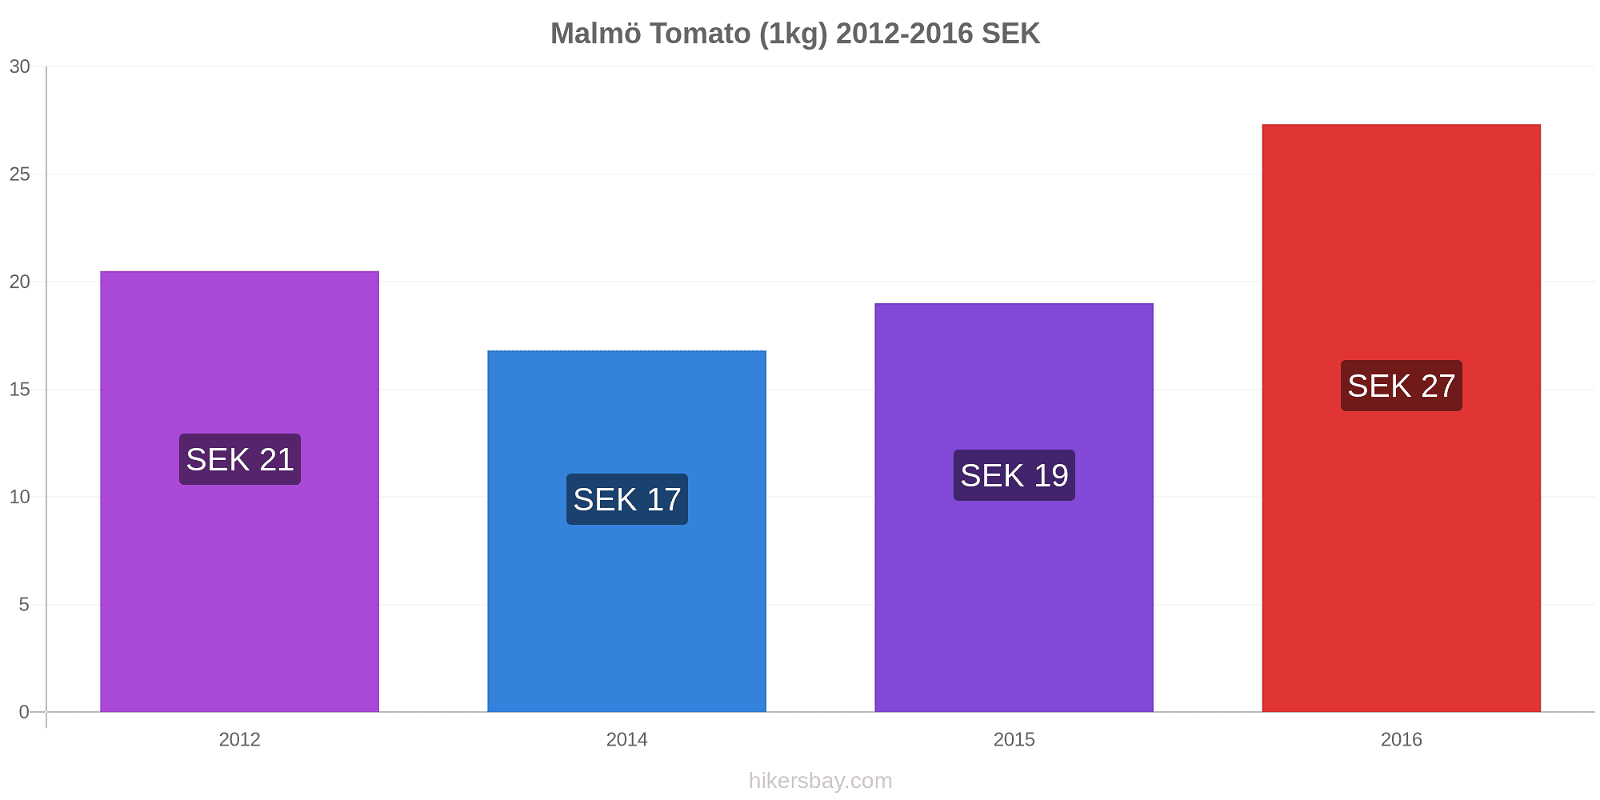 Malmö price changes Tomato (1kg) hikersbay.com